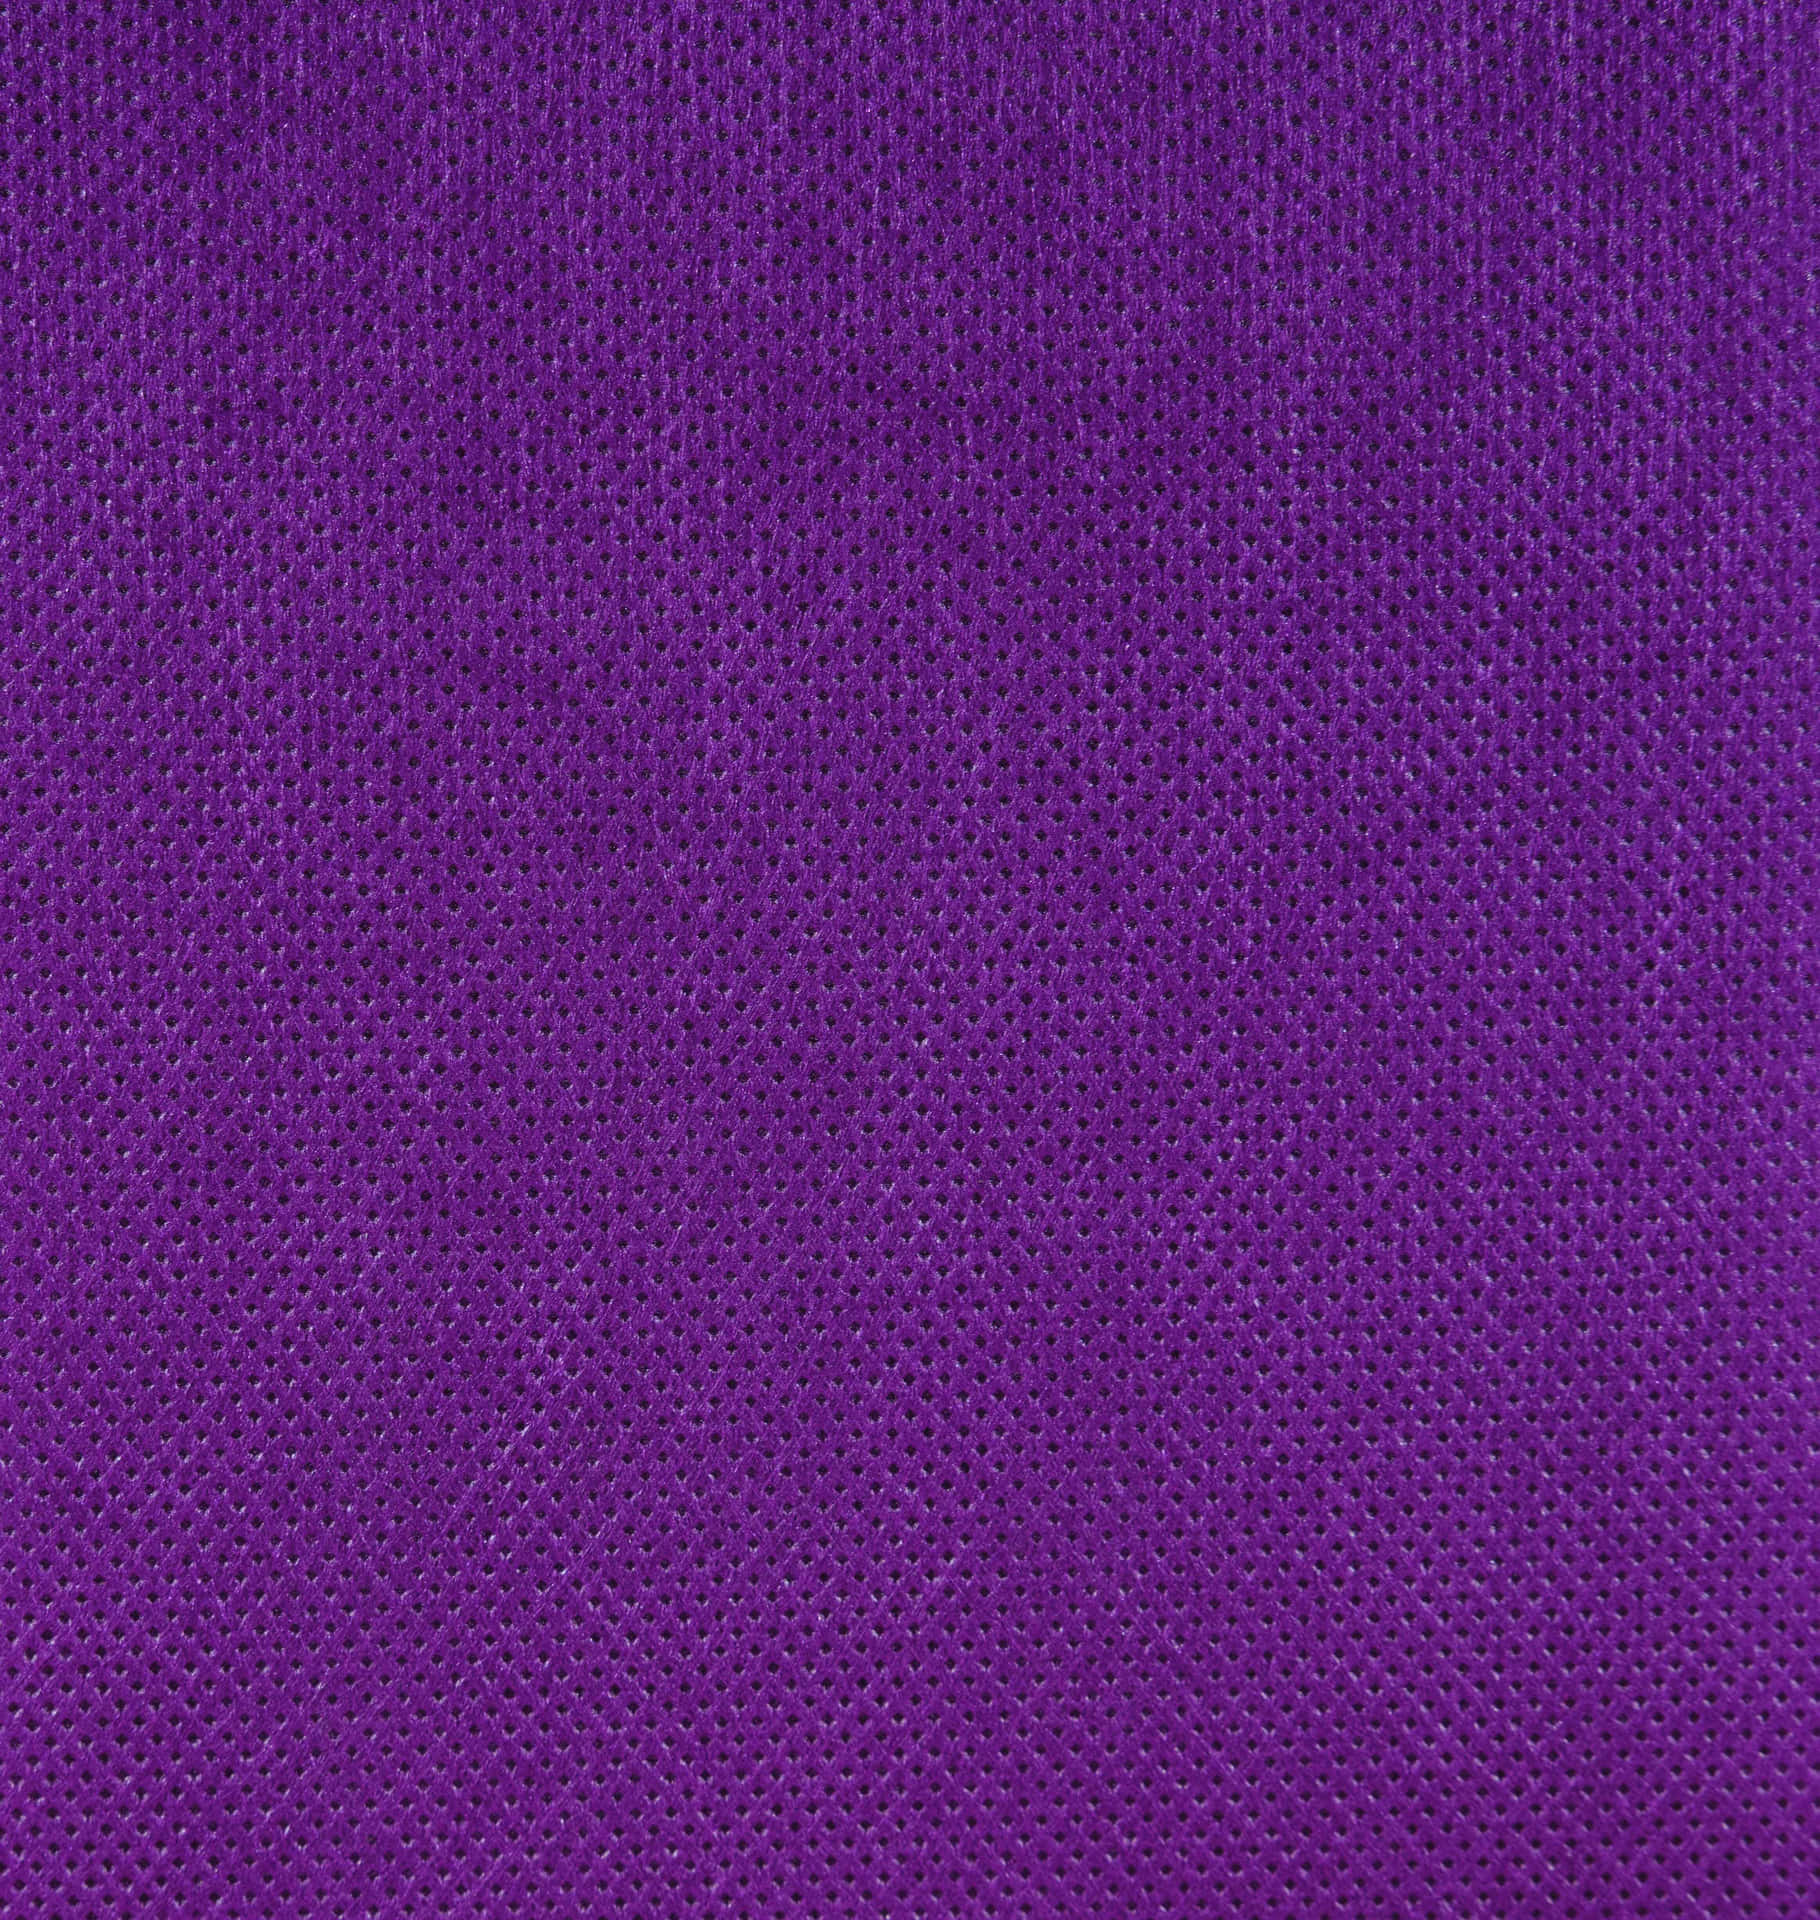 Soft, Textured Purple Fabrics Perfect for Home Decor Wallpaper